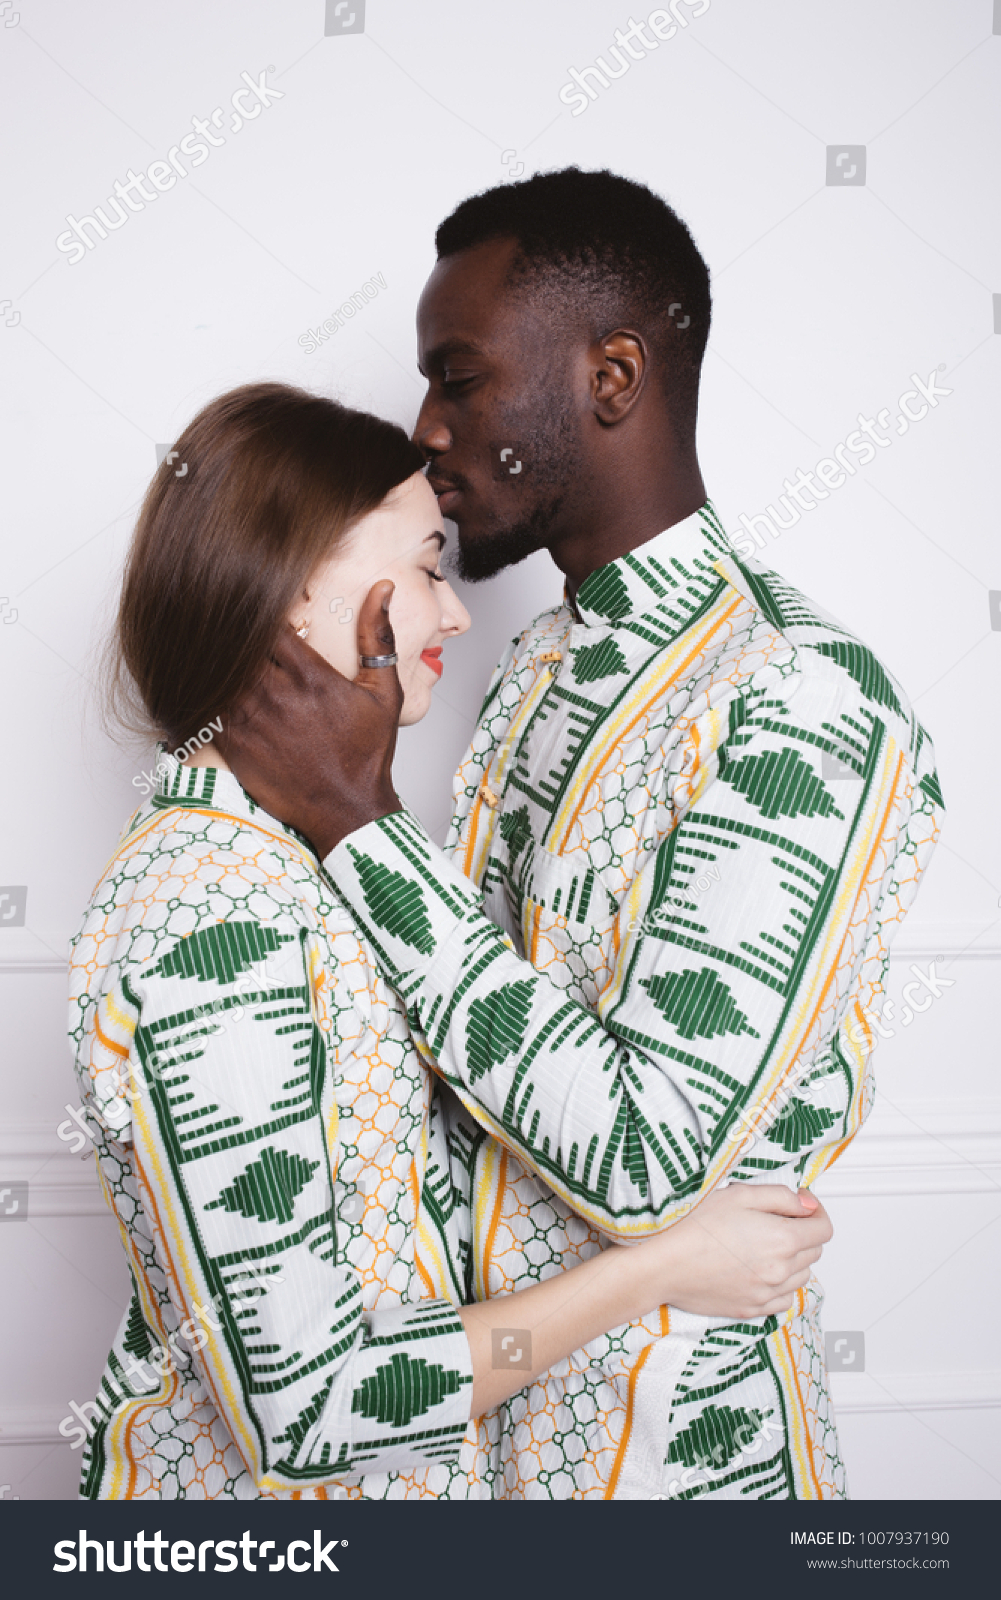 Interracial dating in south africa in Xiamen